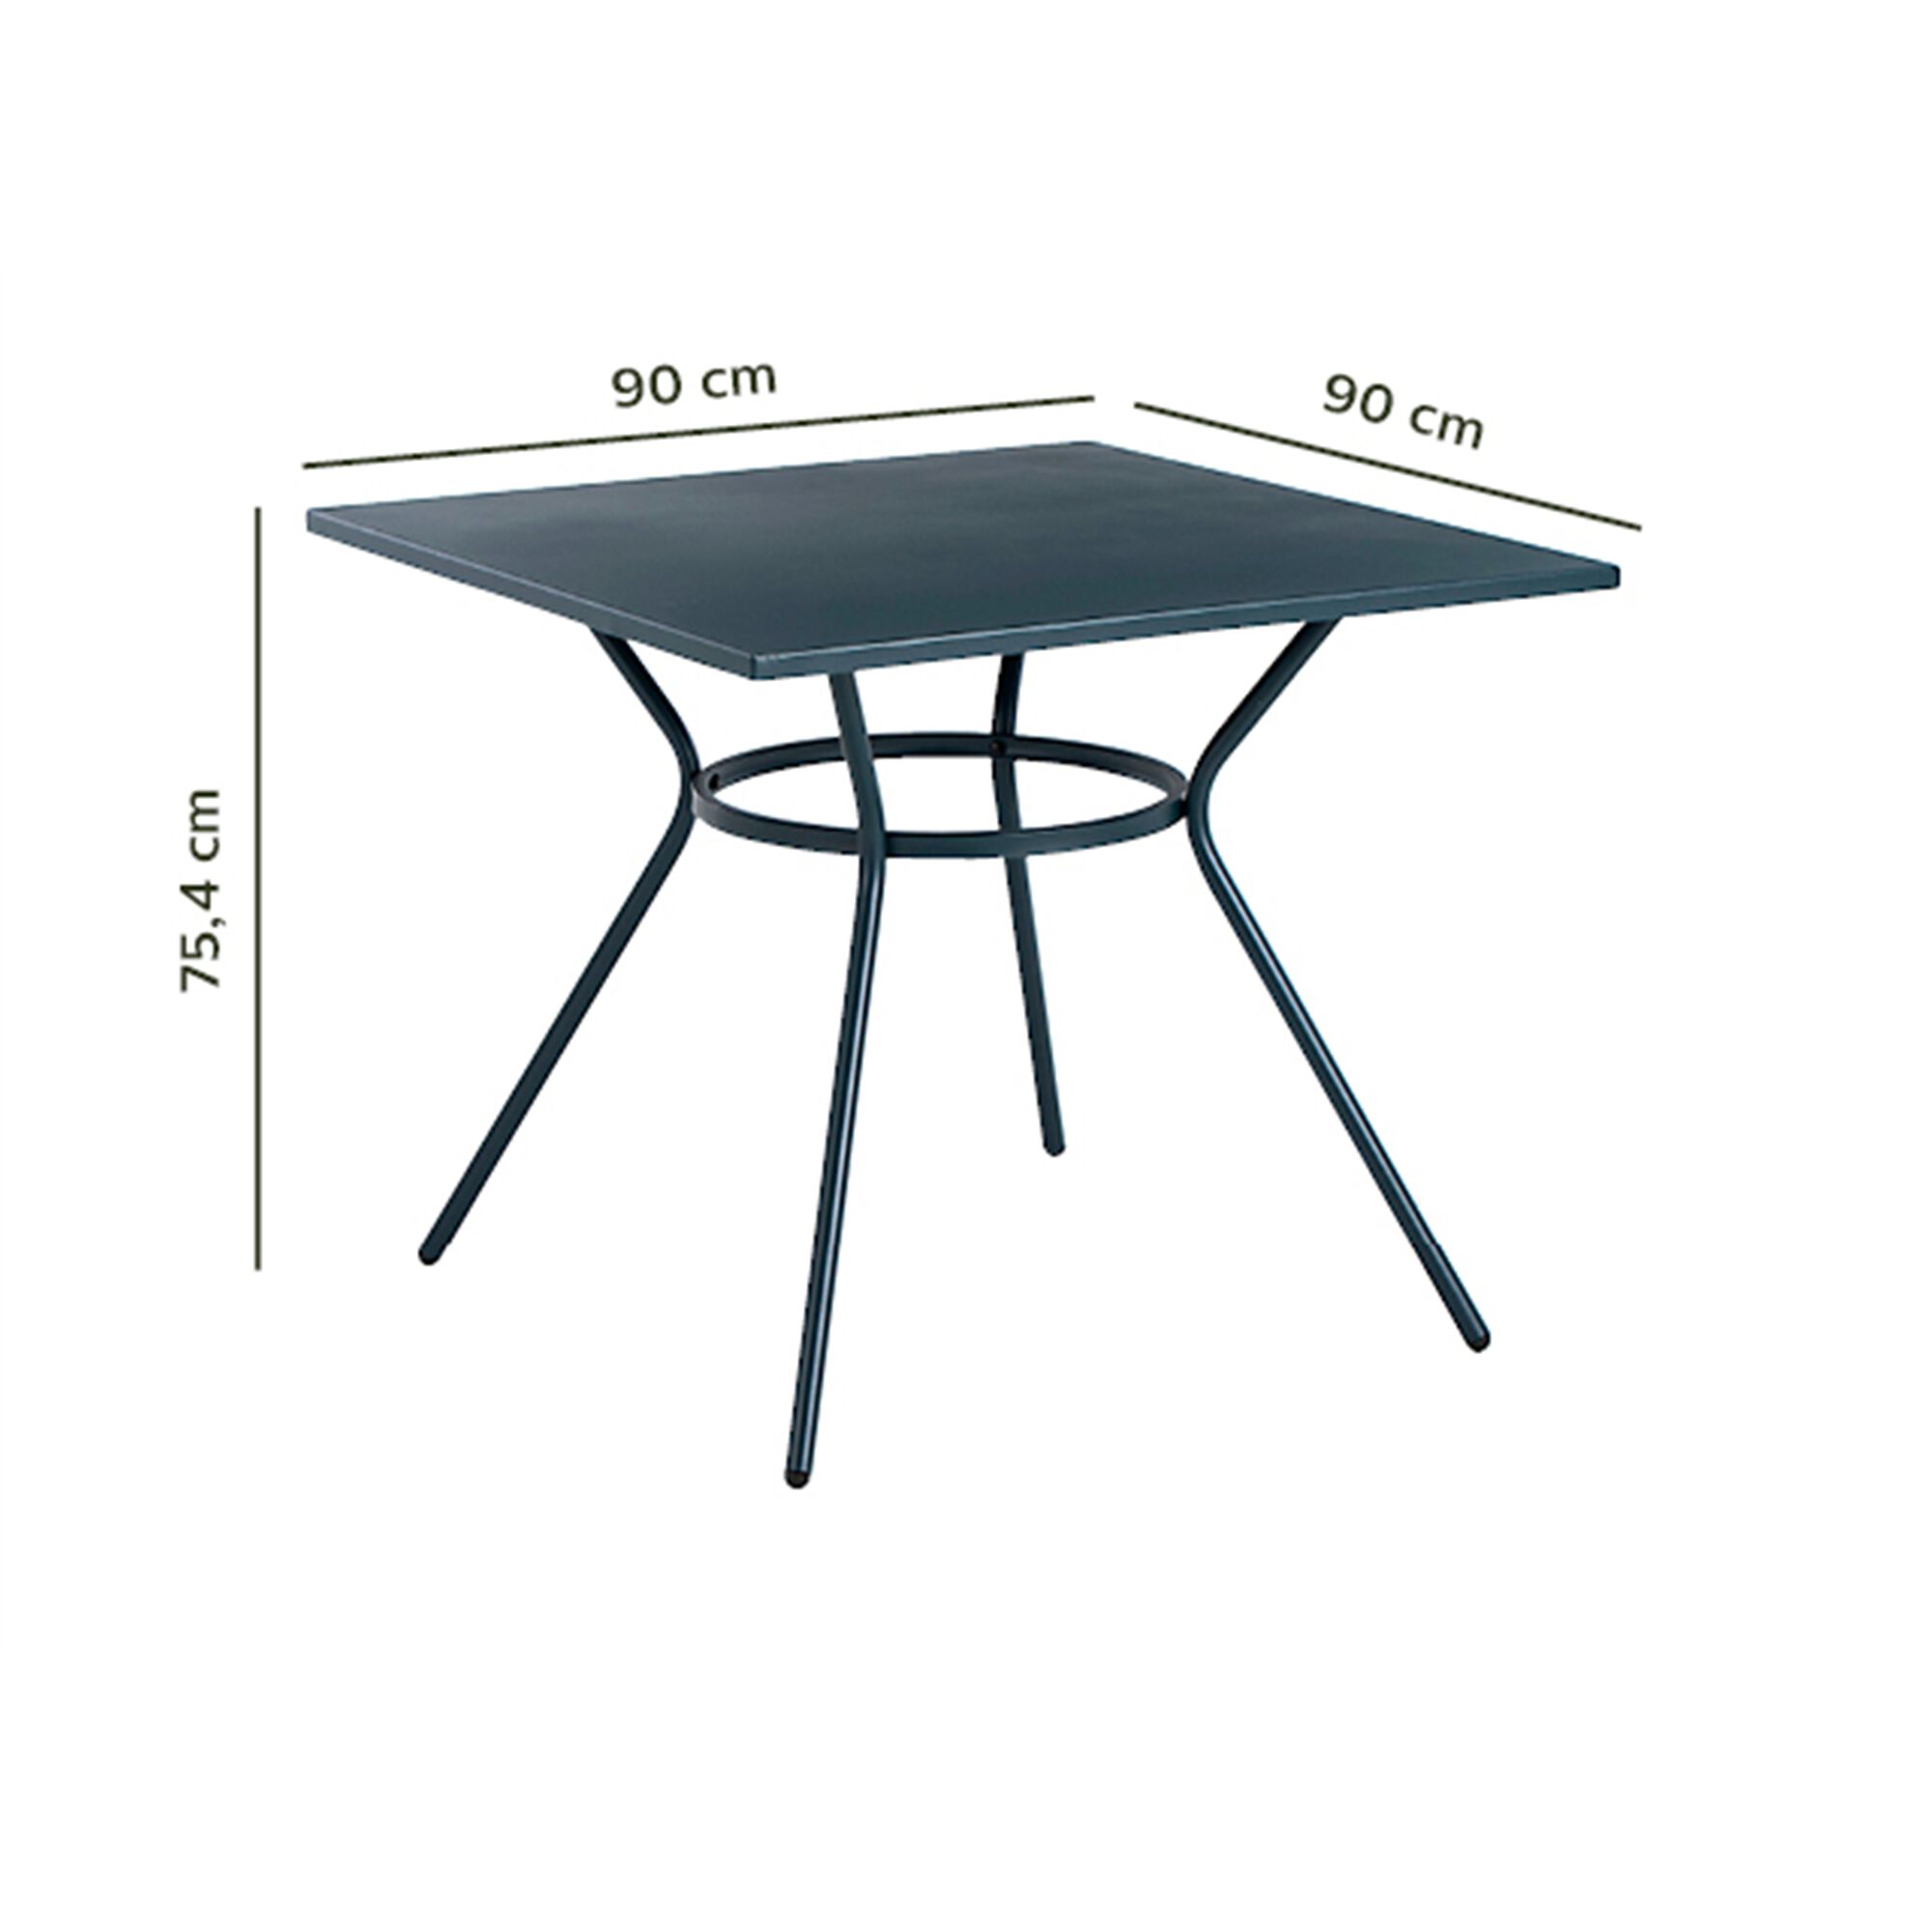 Table de repas jardin fixe en acier - bleu figuerolles  (4 places)-STRACCIA